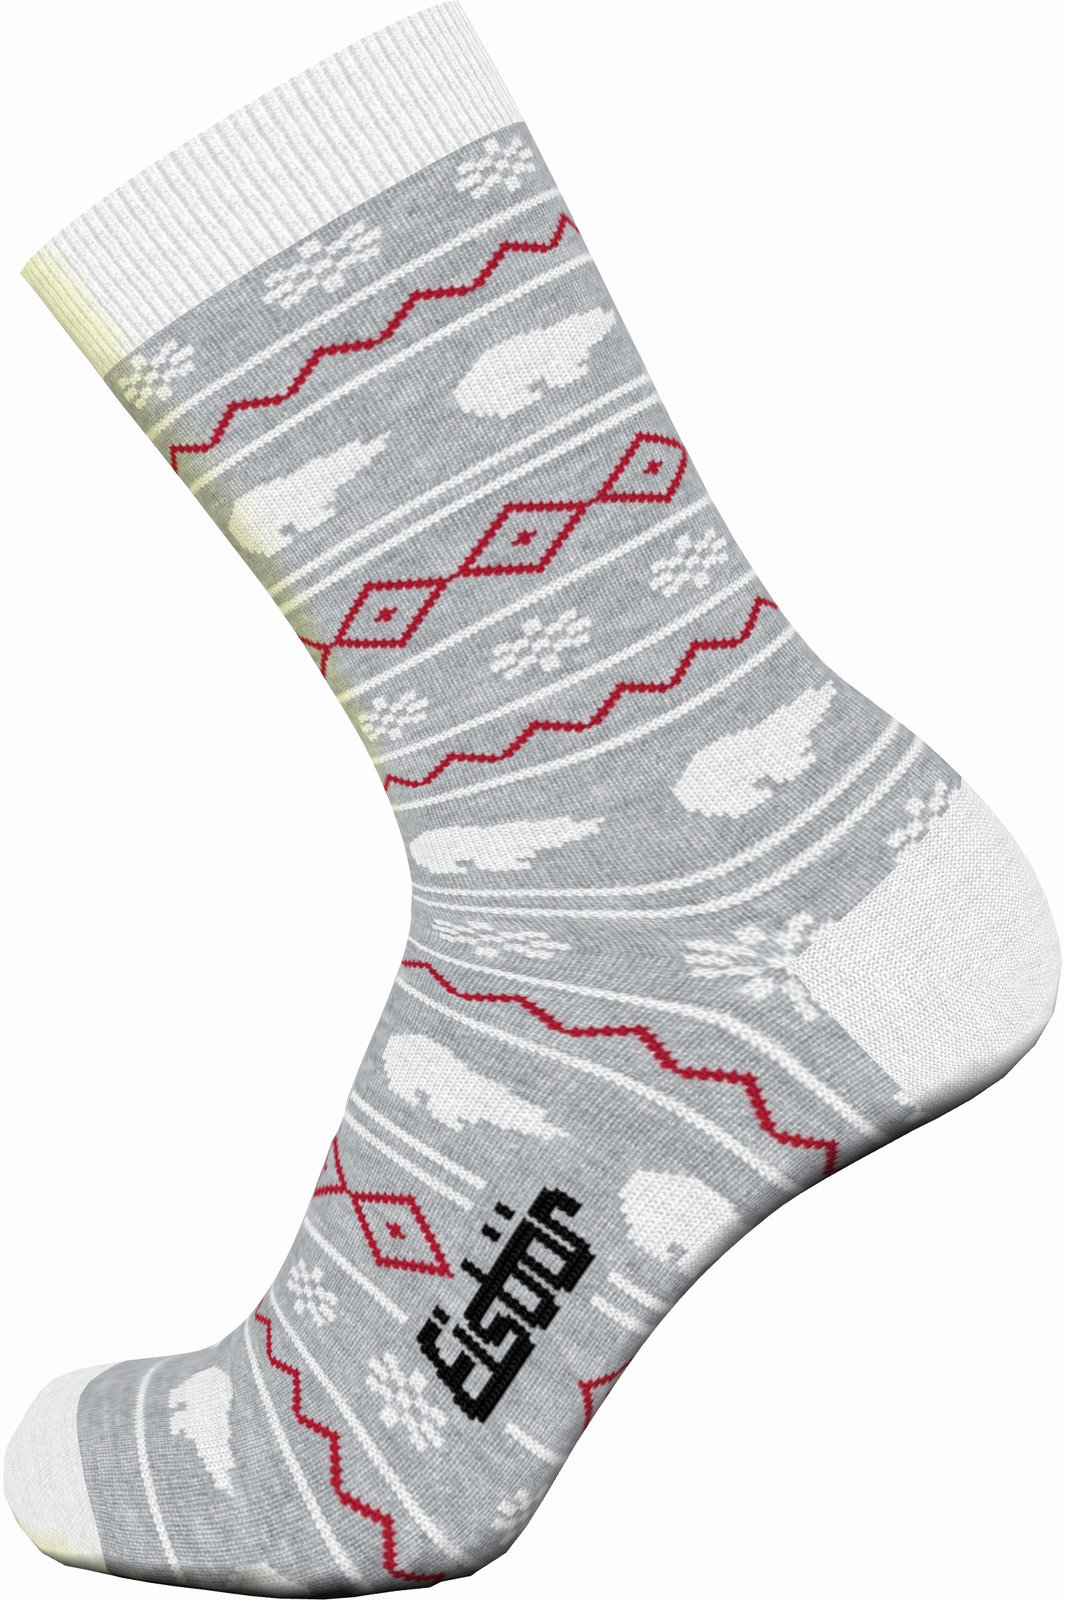 СКИ чорапи Eisbär Lifestyle Jacquard Червен-Cив 27-30 СКИ чорапи (Само разопакован)